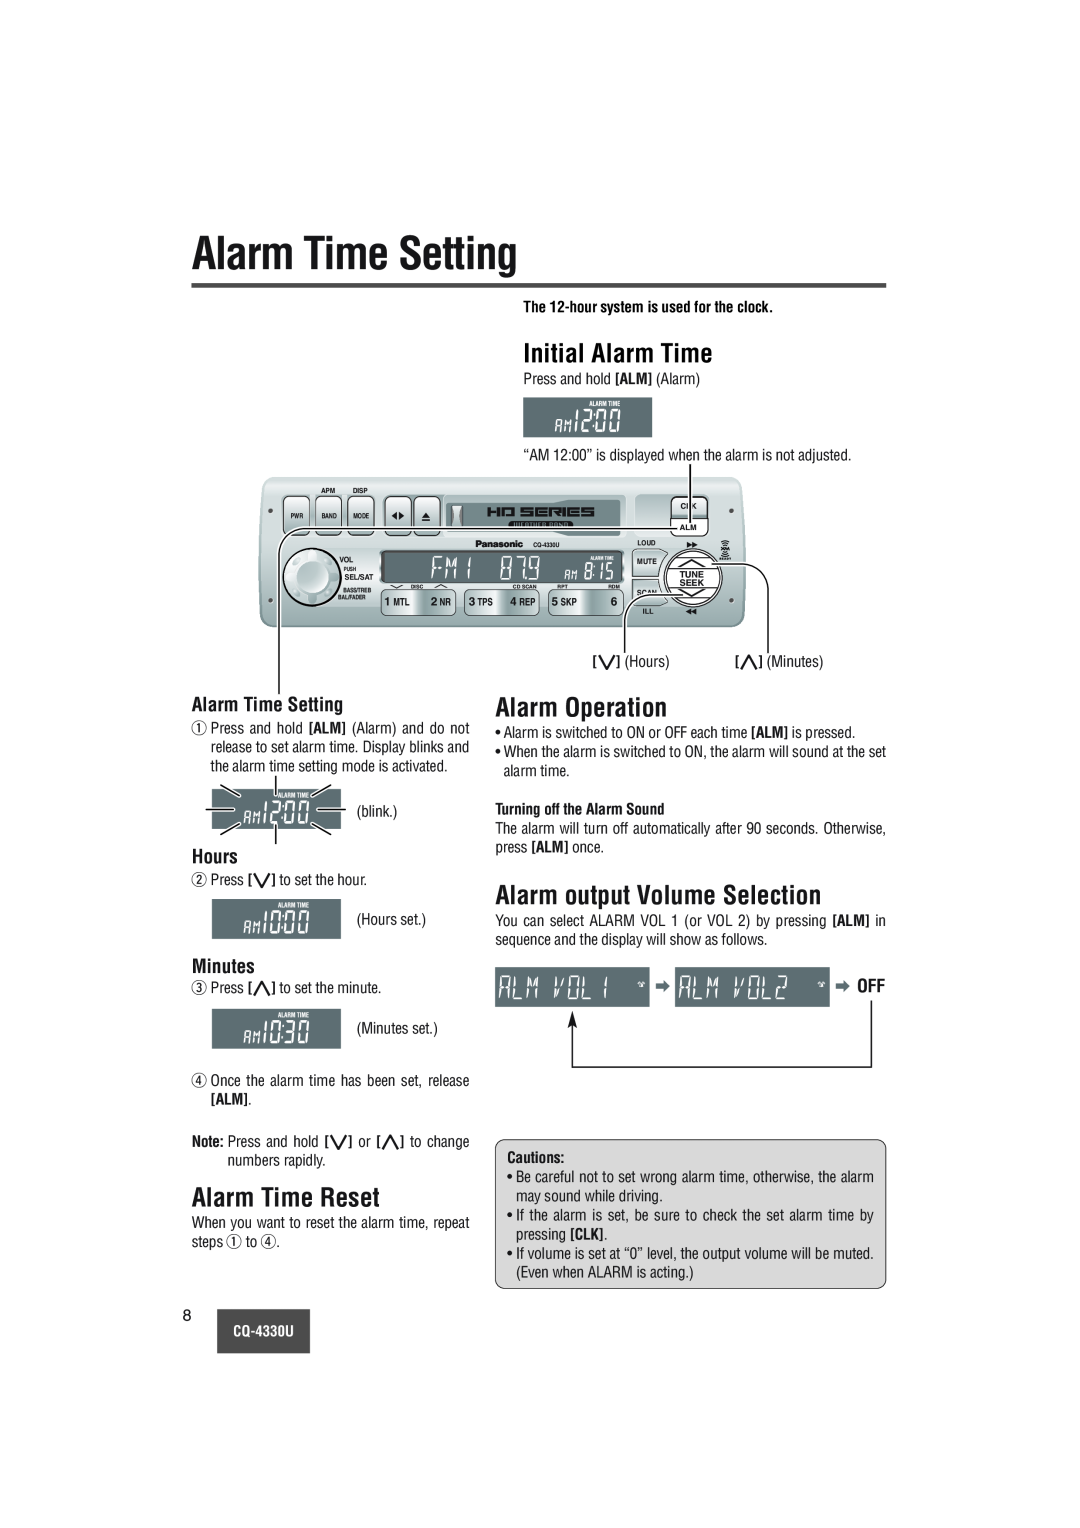 Panasonic CQ-4330U Alarm Time Setting, Initial Alarm Time, Alarm Operation, Alarm output Volume Selection, Hours, Minutes 